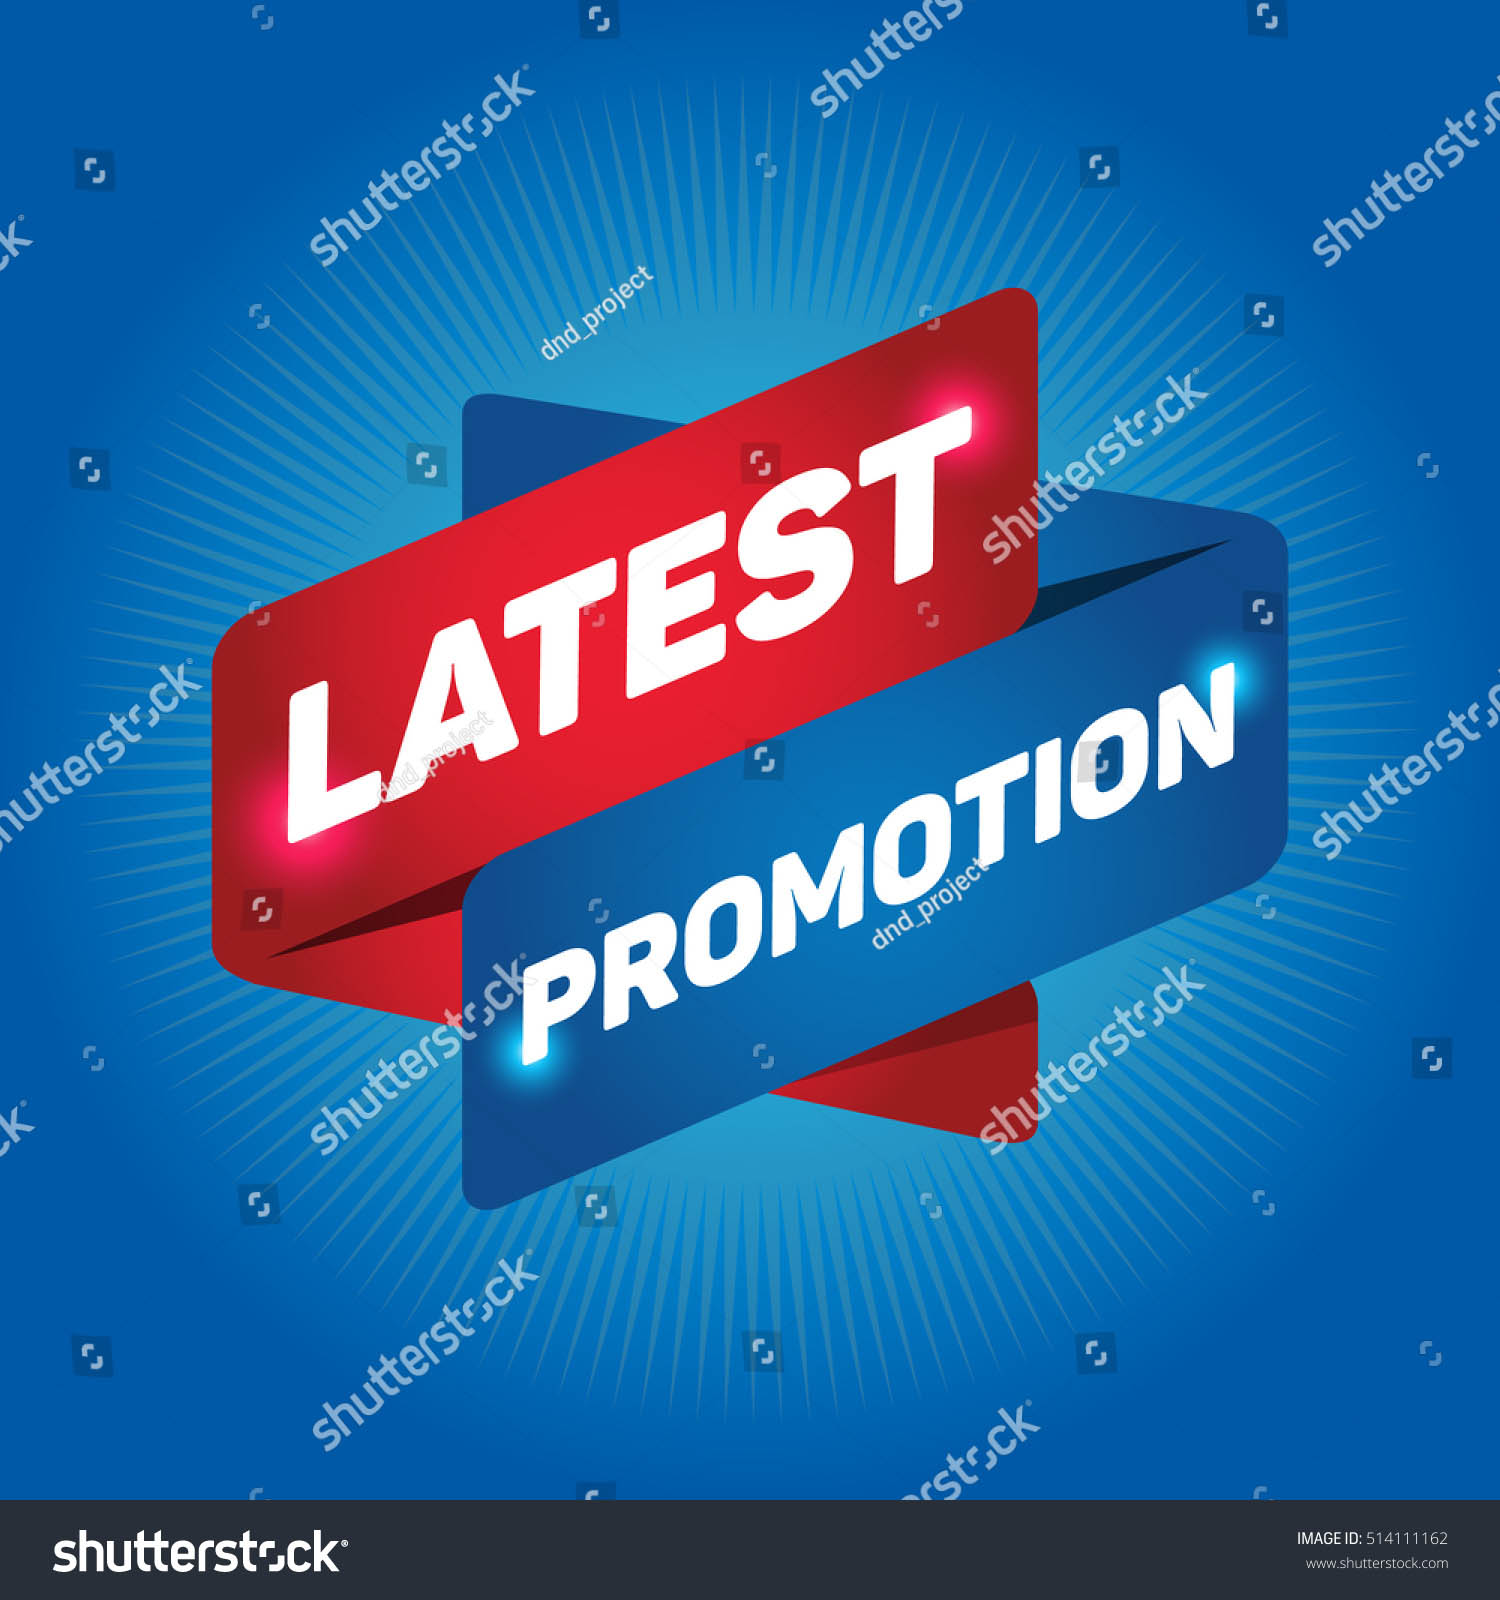 latest-promotion